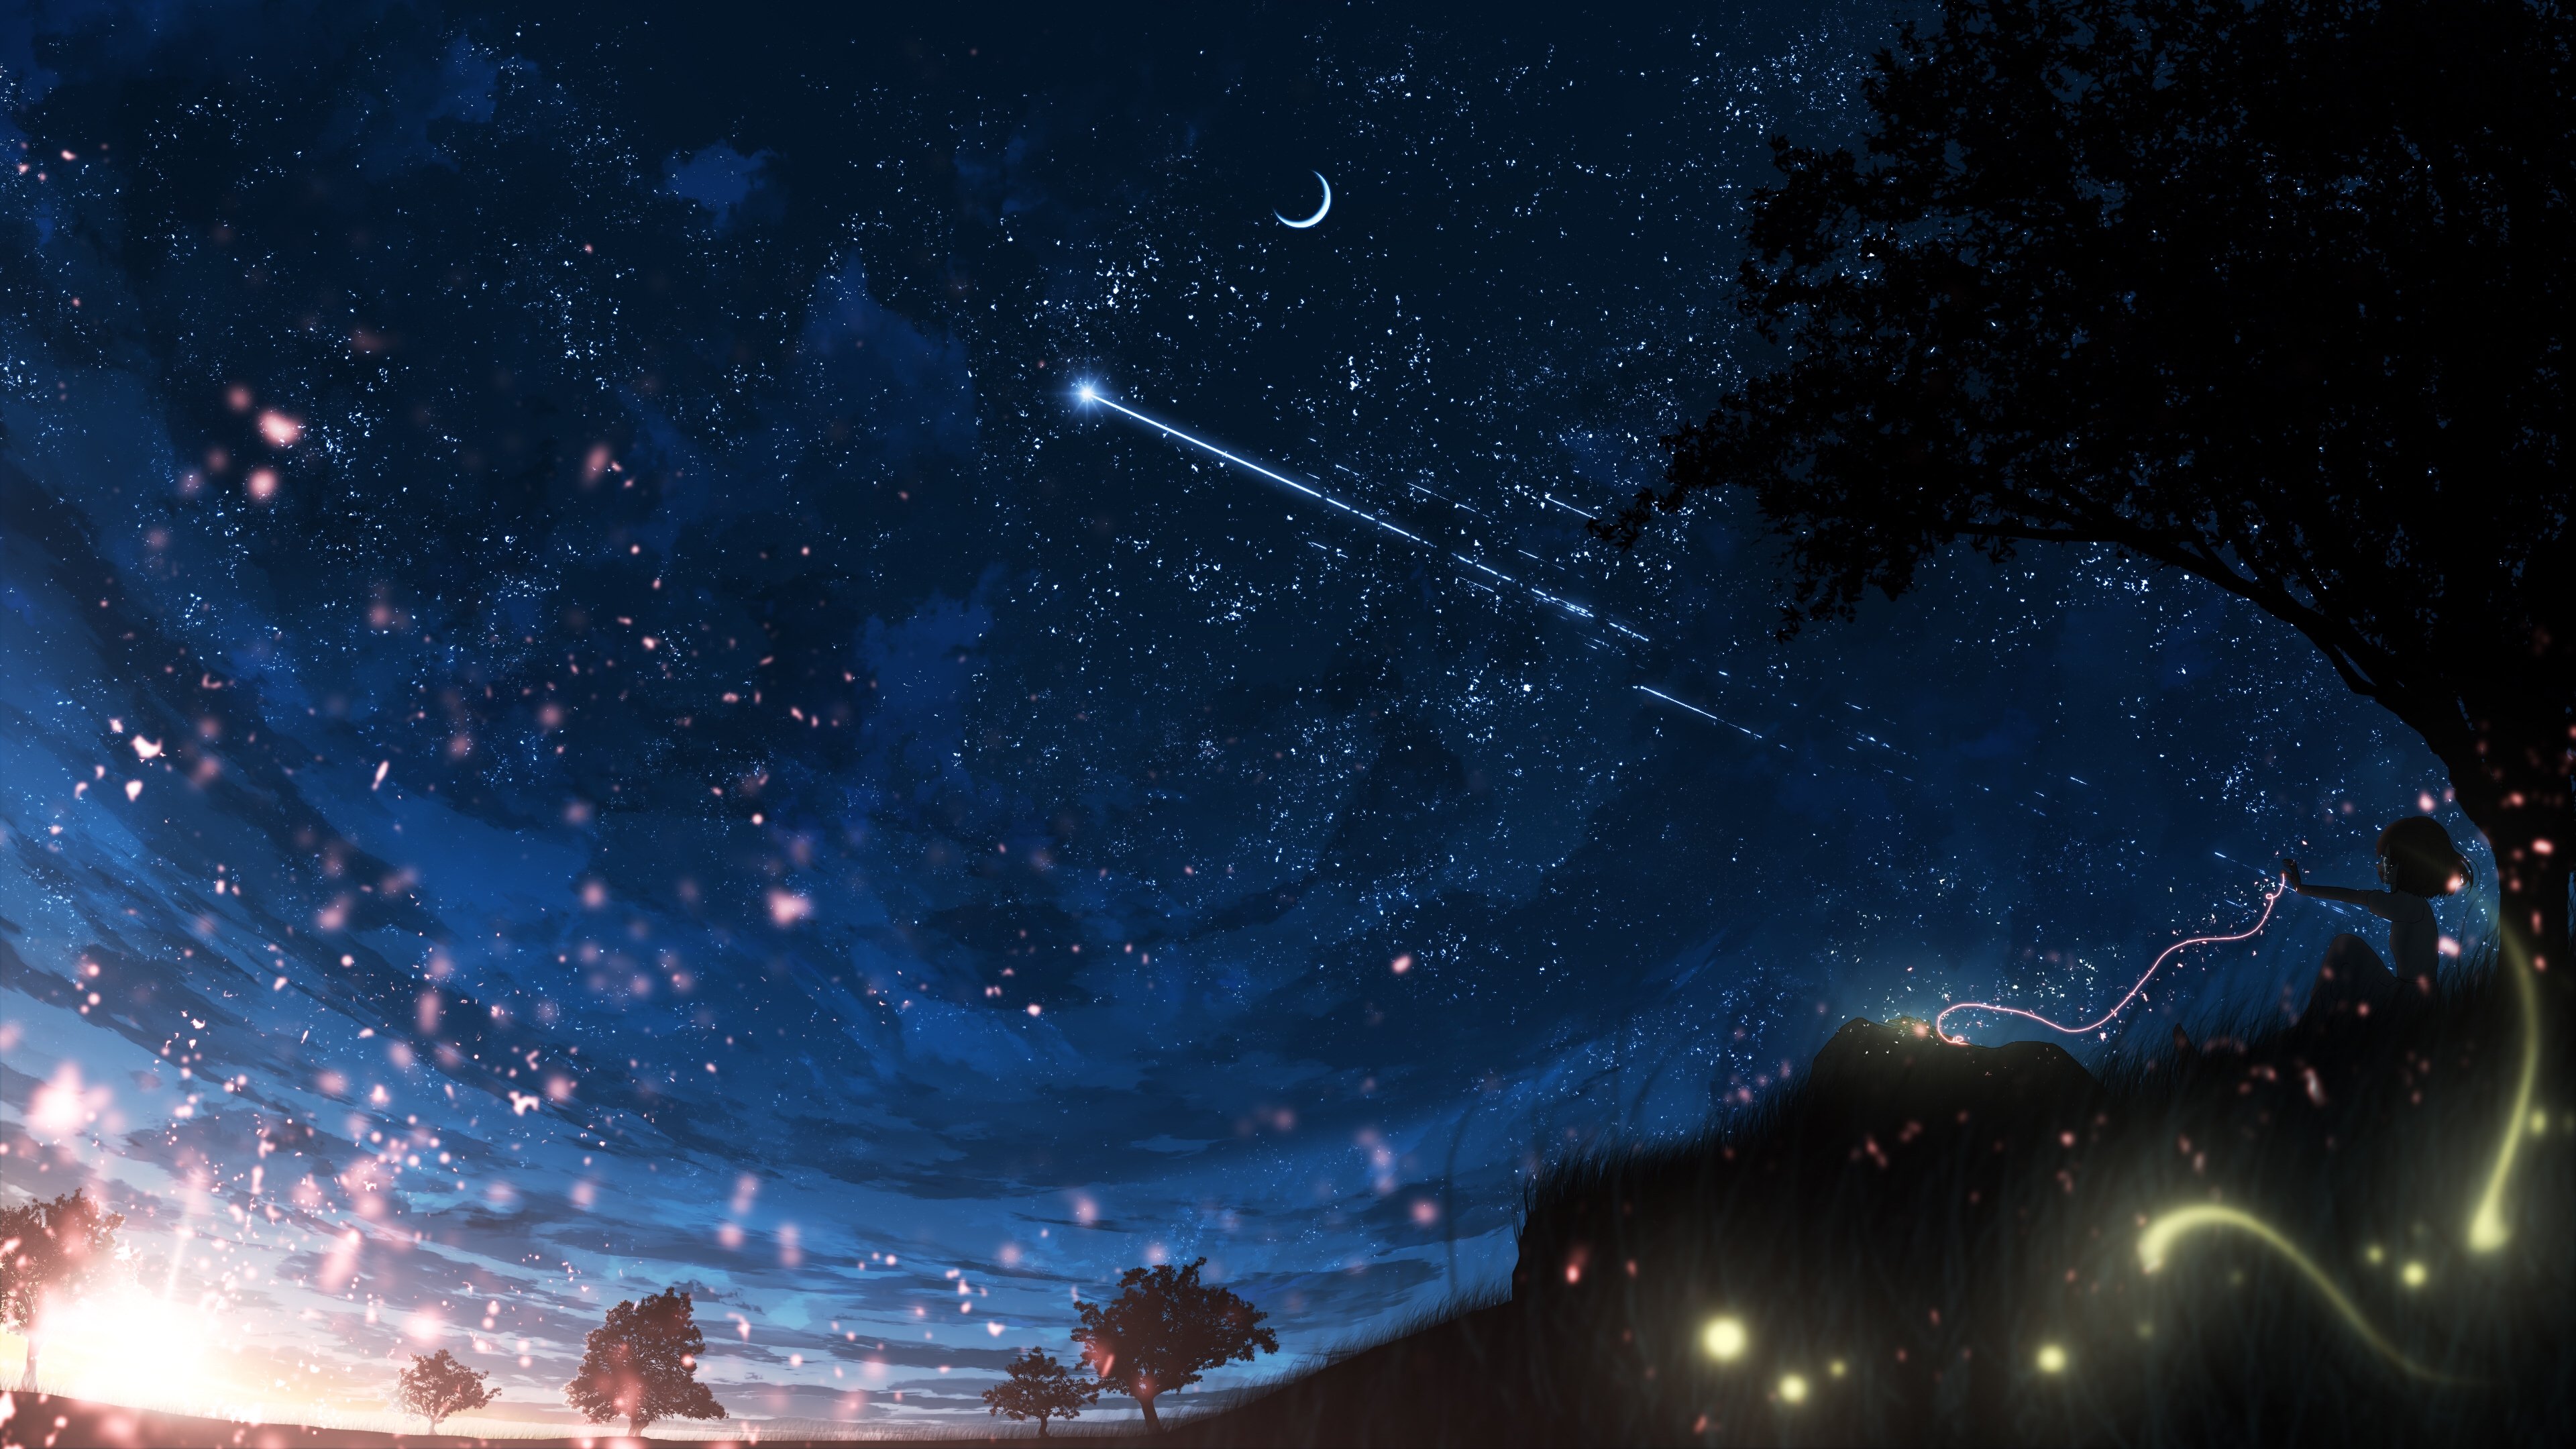 Download 3840x2160 Anime Landscape, Crescent, Night, Falling Star, Anime Girl, Scenic Wallpaper for UHD TV